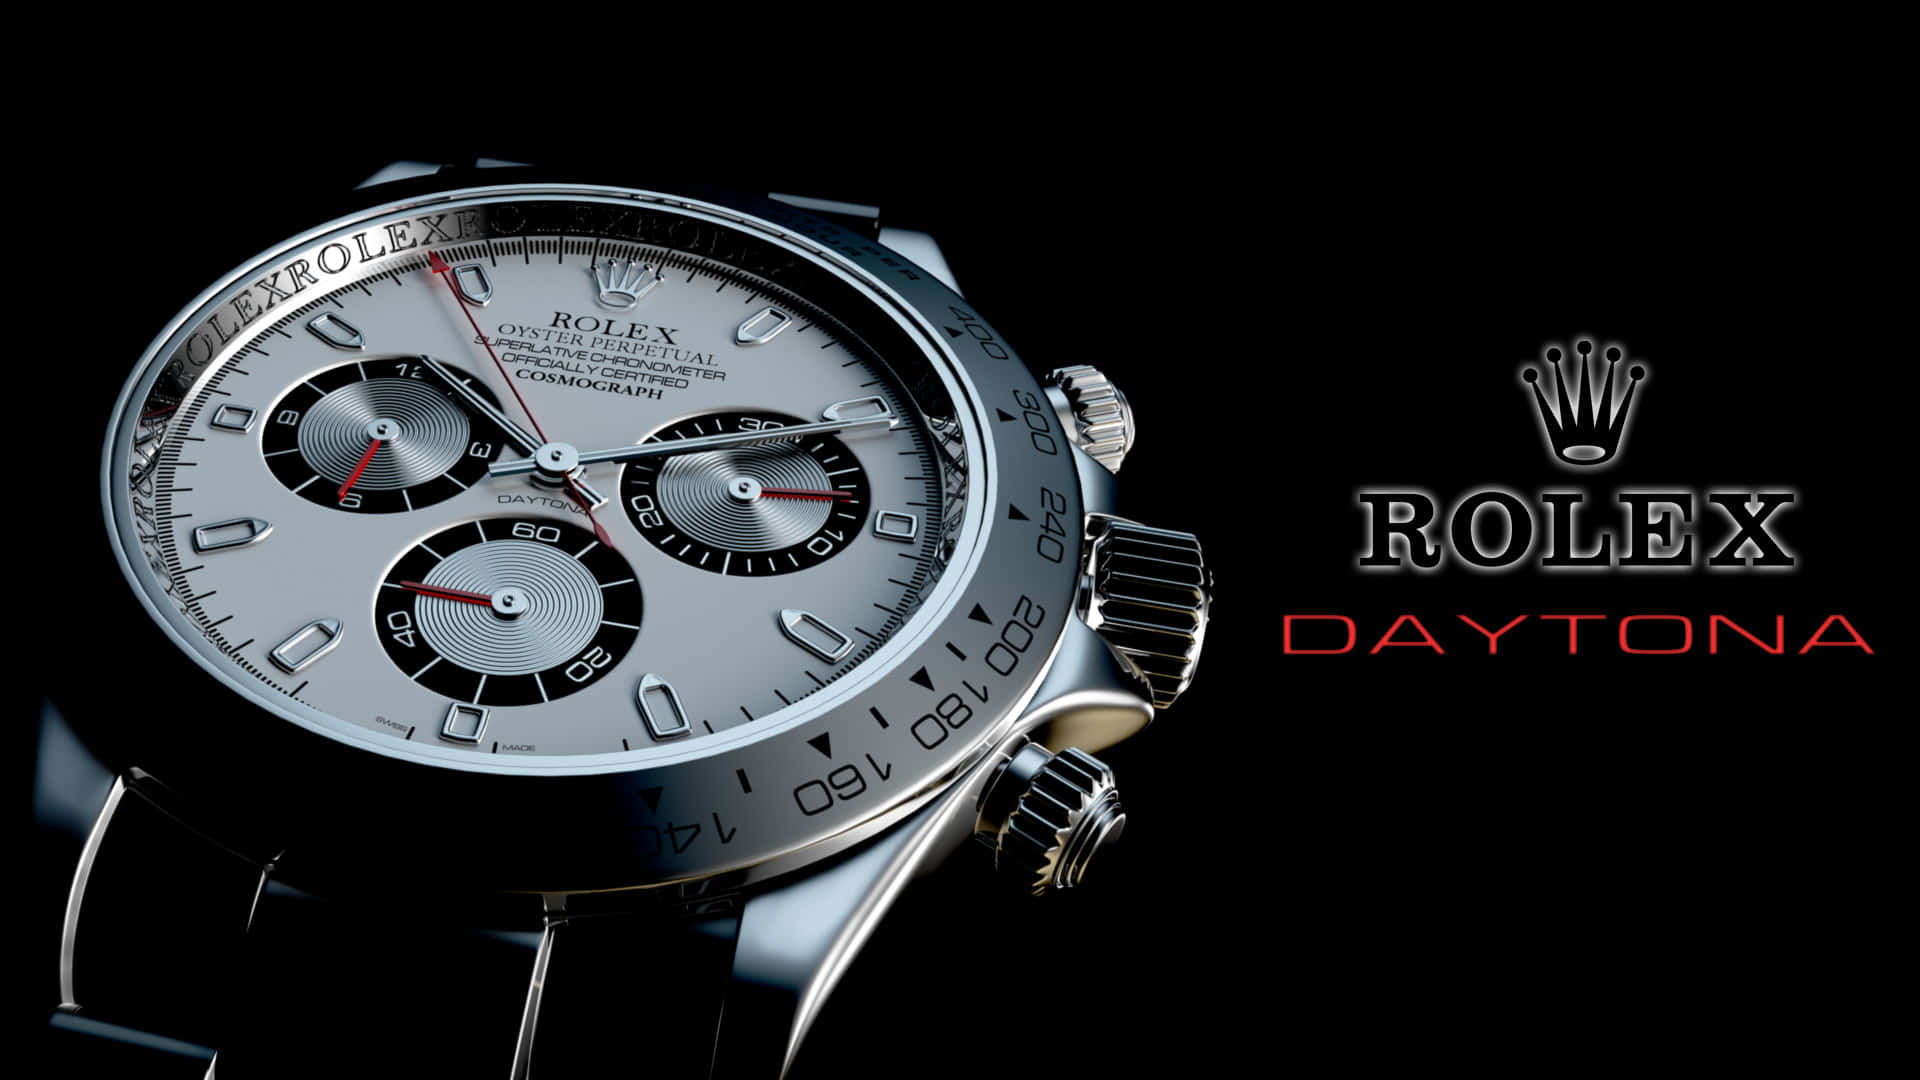 Iconic Rolex Timepiece Showcasing Its Impeccable Design